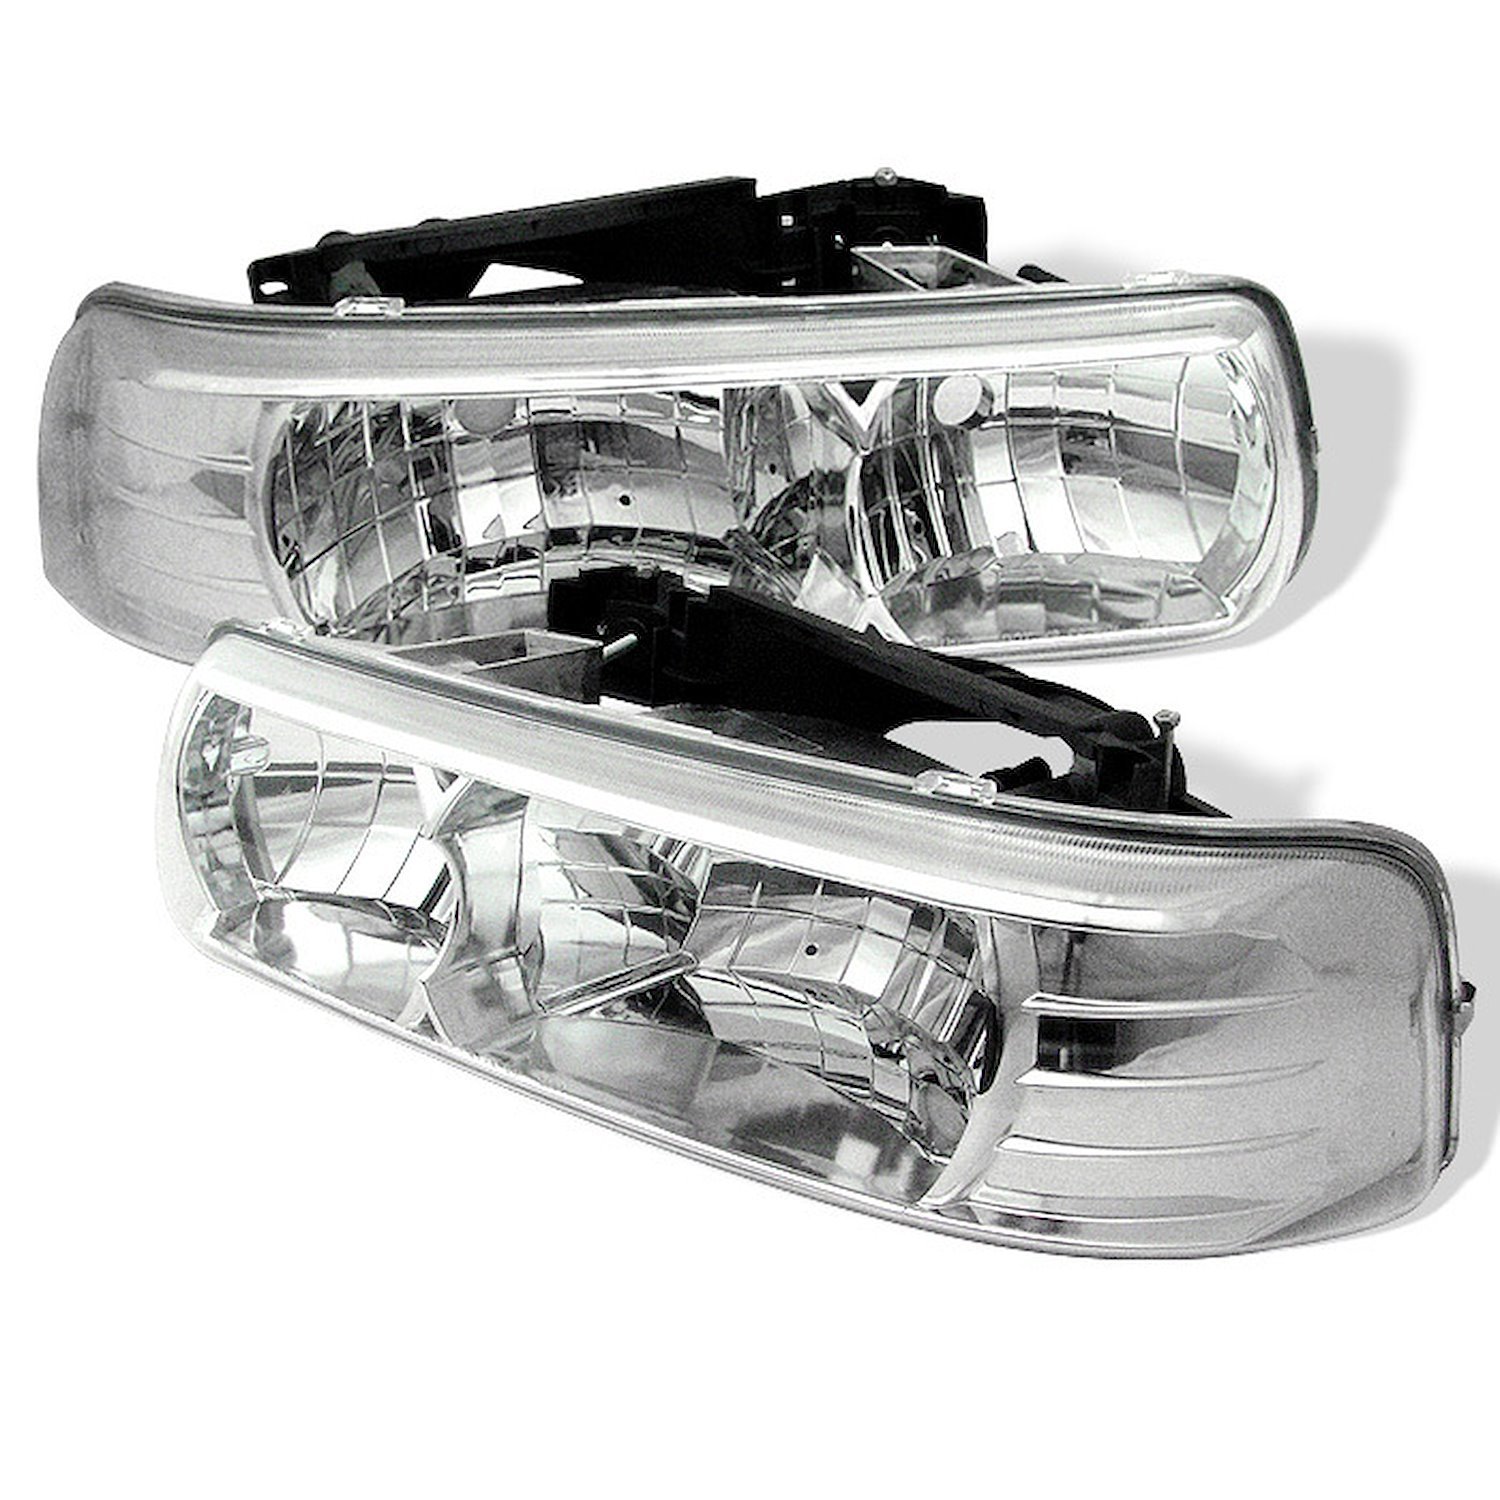 LED Crystal Headlights 1999-2002 Chevy Silverado